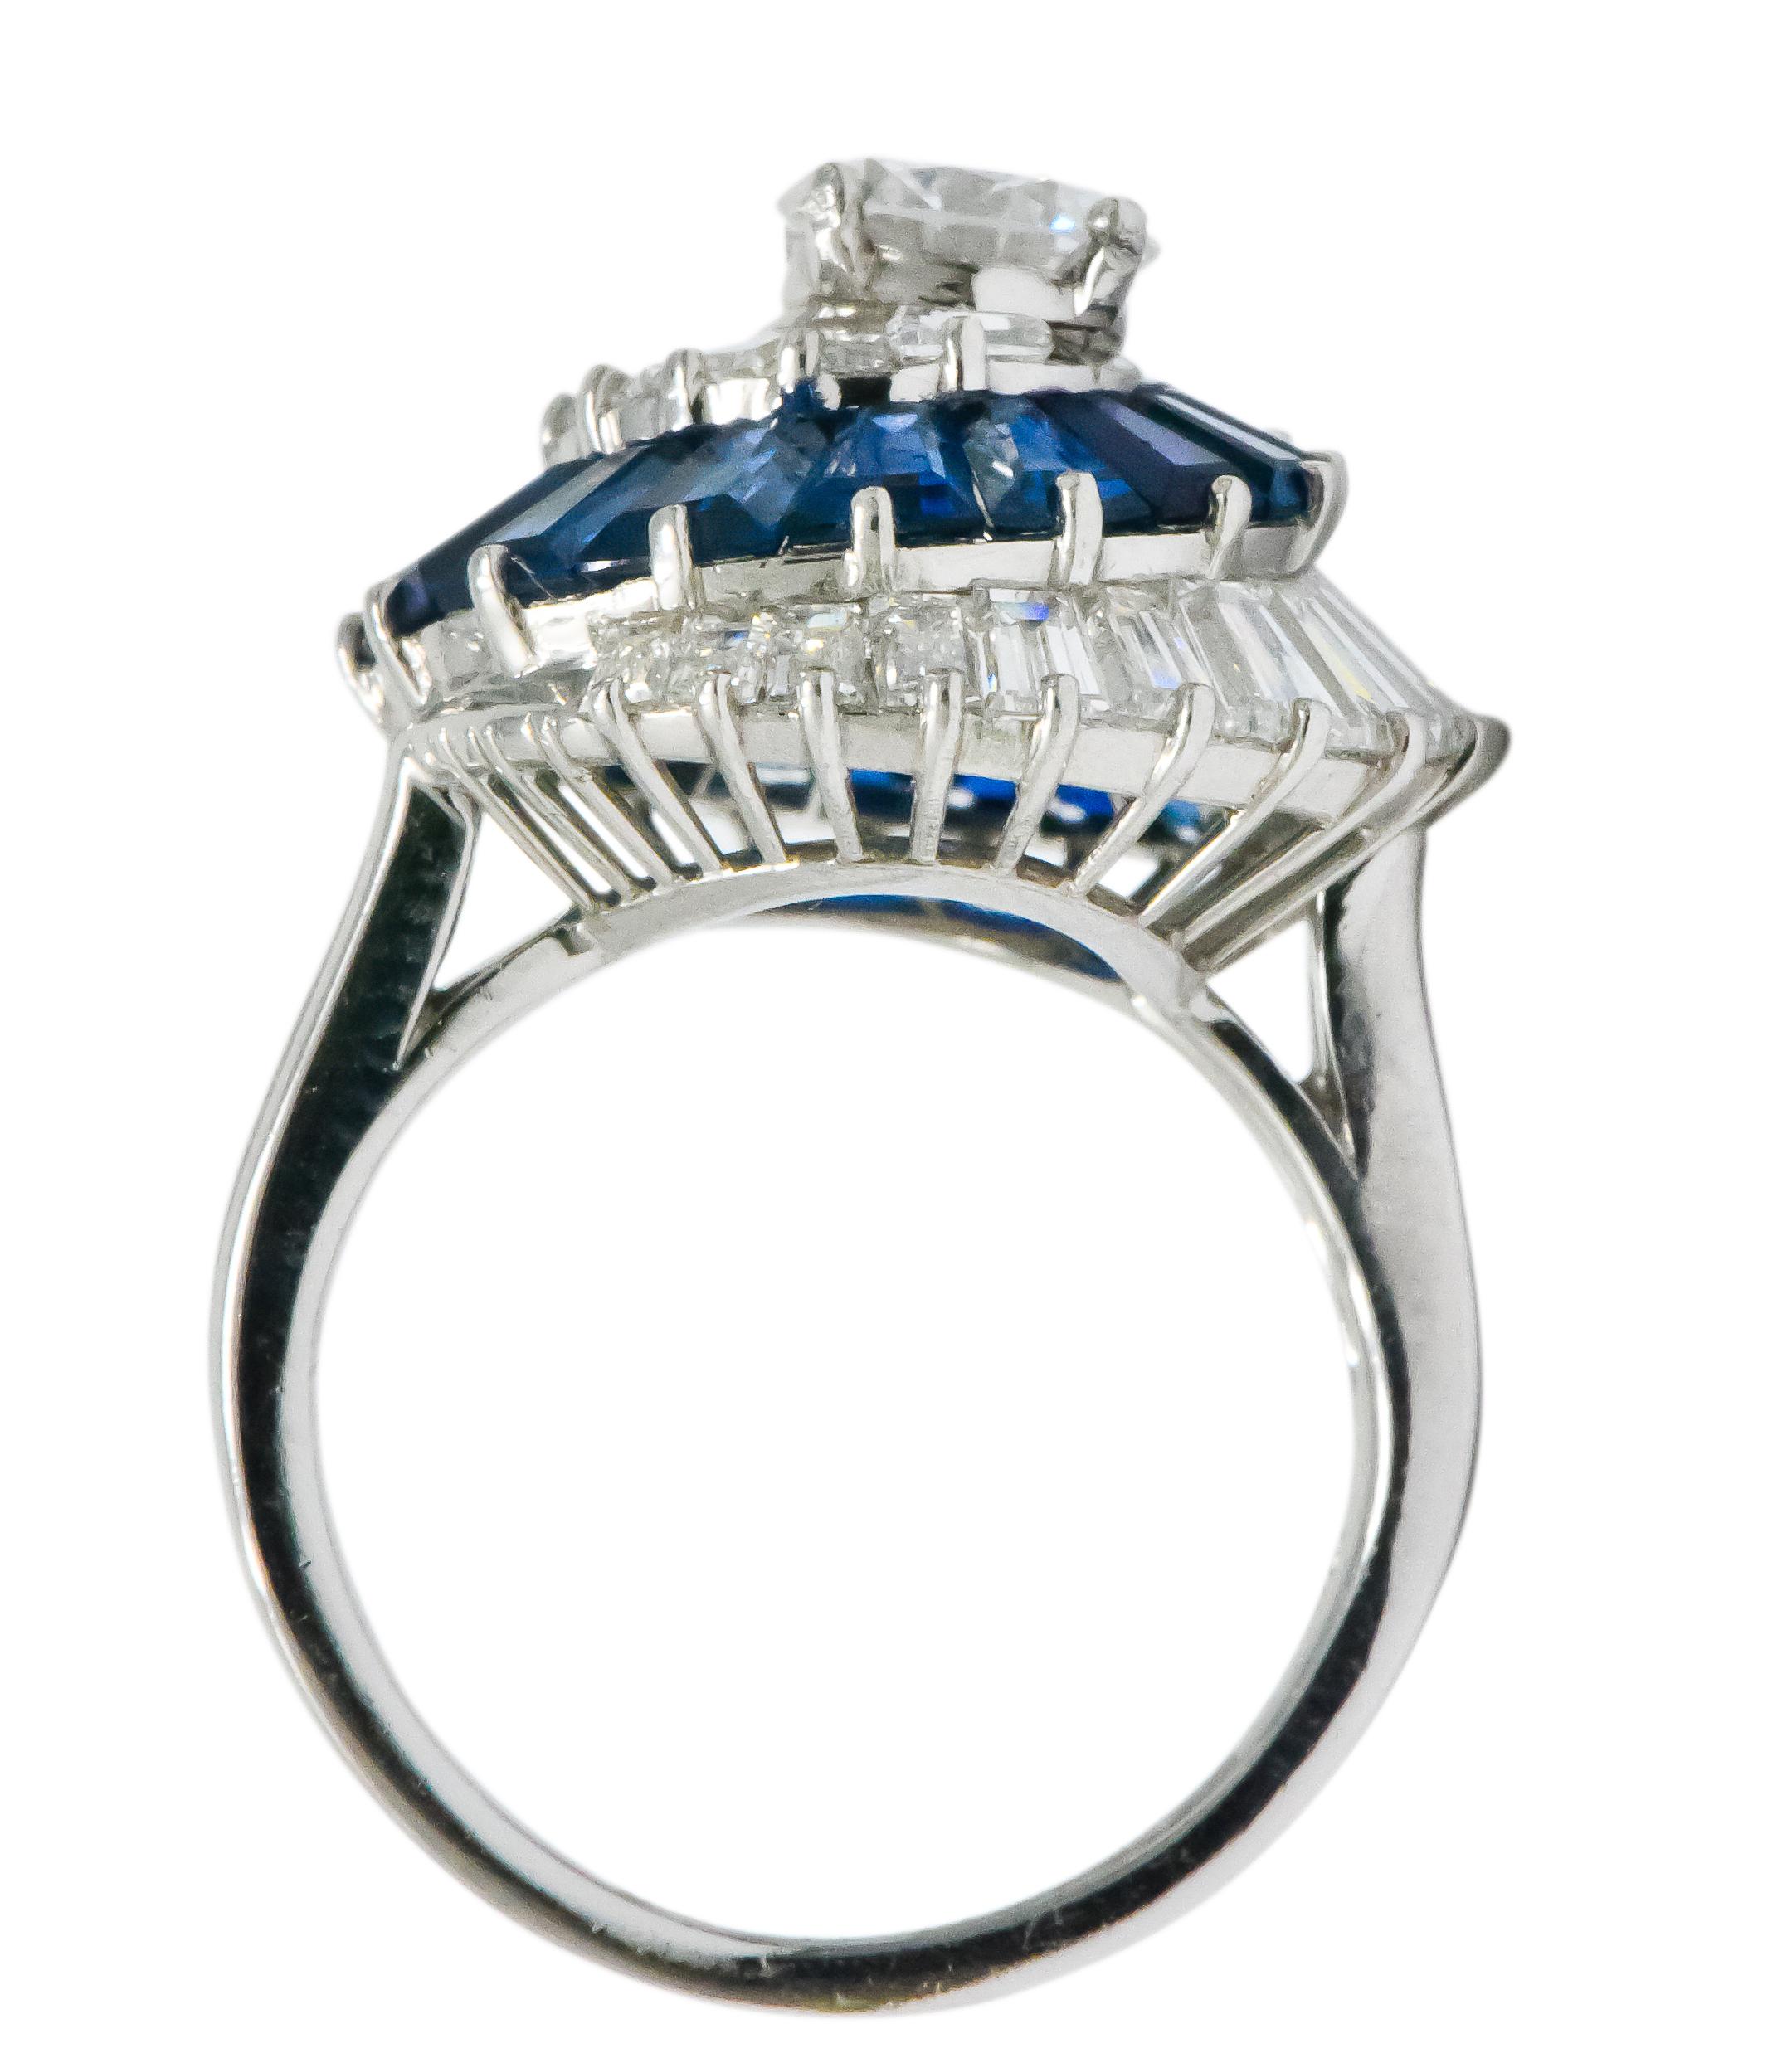 Oscar Heyman Diamond Sapphire Platinum Swirl Ring
Circa 1965
A round brilliant diamond center weighing .80 carat, D color, VS1 clarity centering a swirl of tapered baguette cut diamonds 
2.25 carat total weight of white diamonds, E-F color, VS